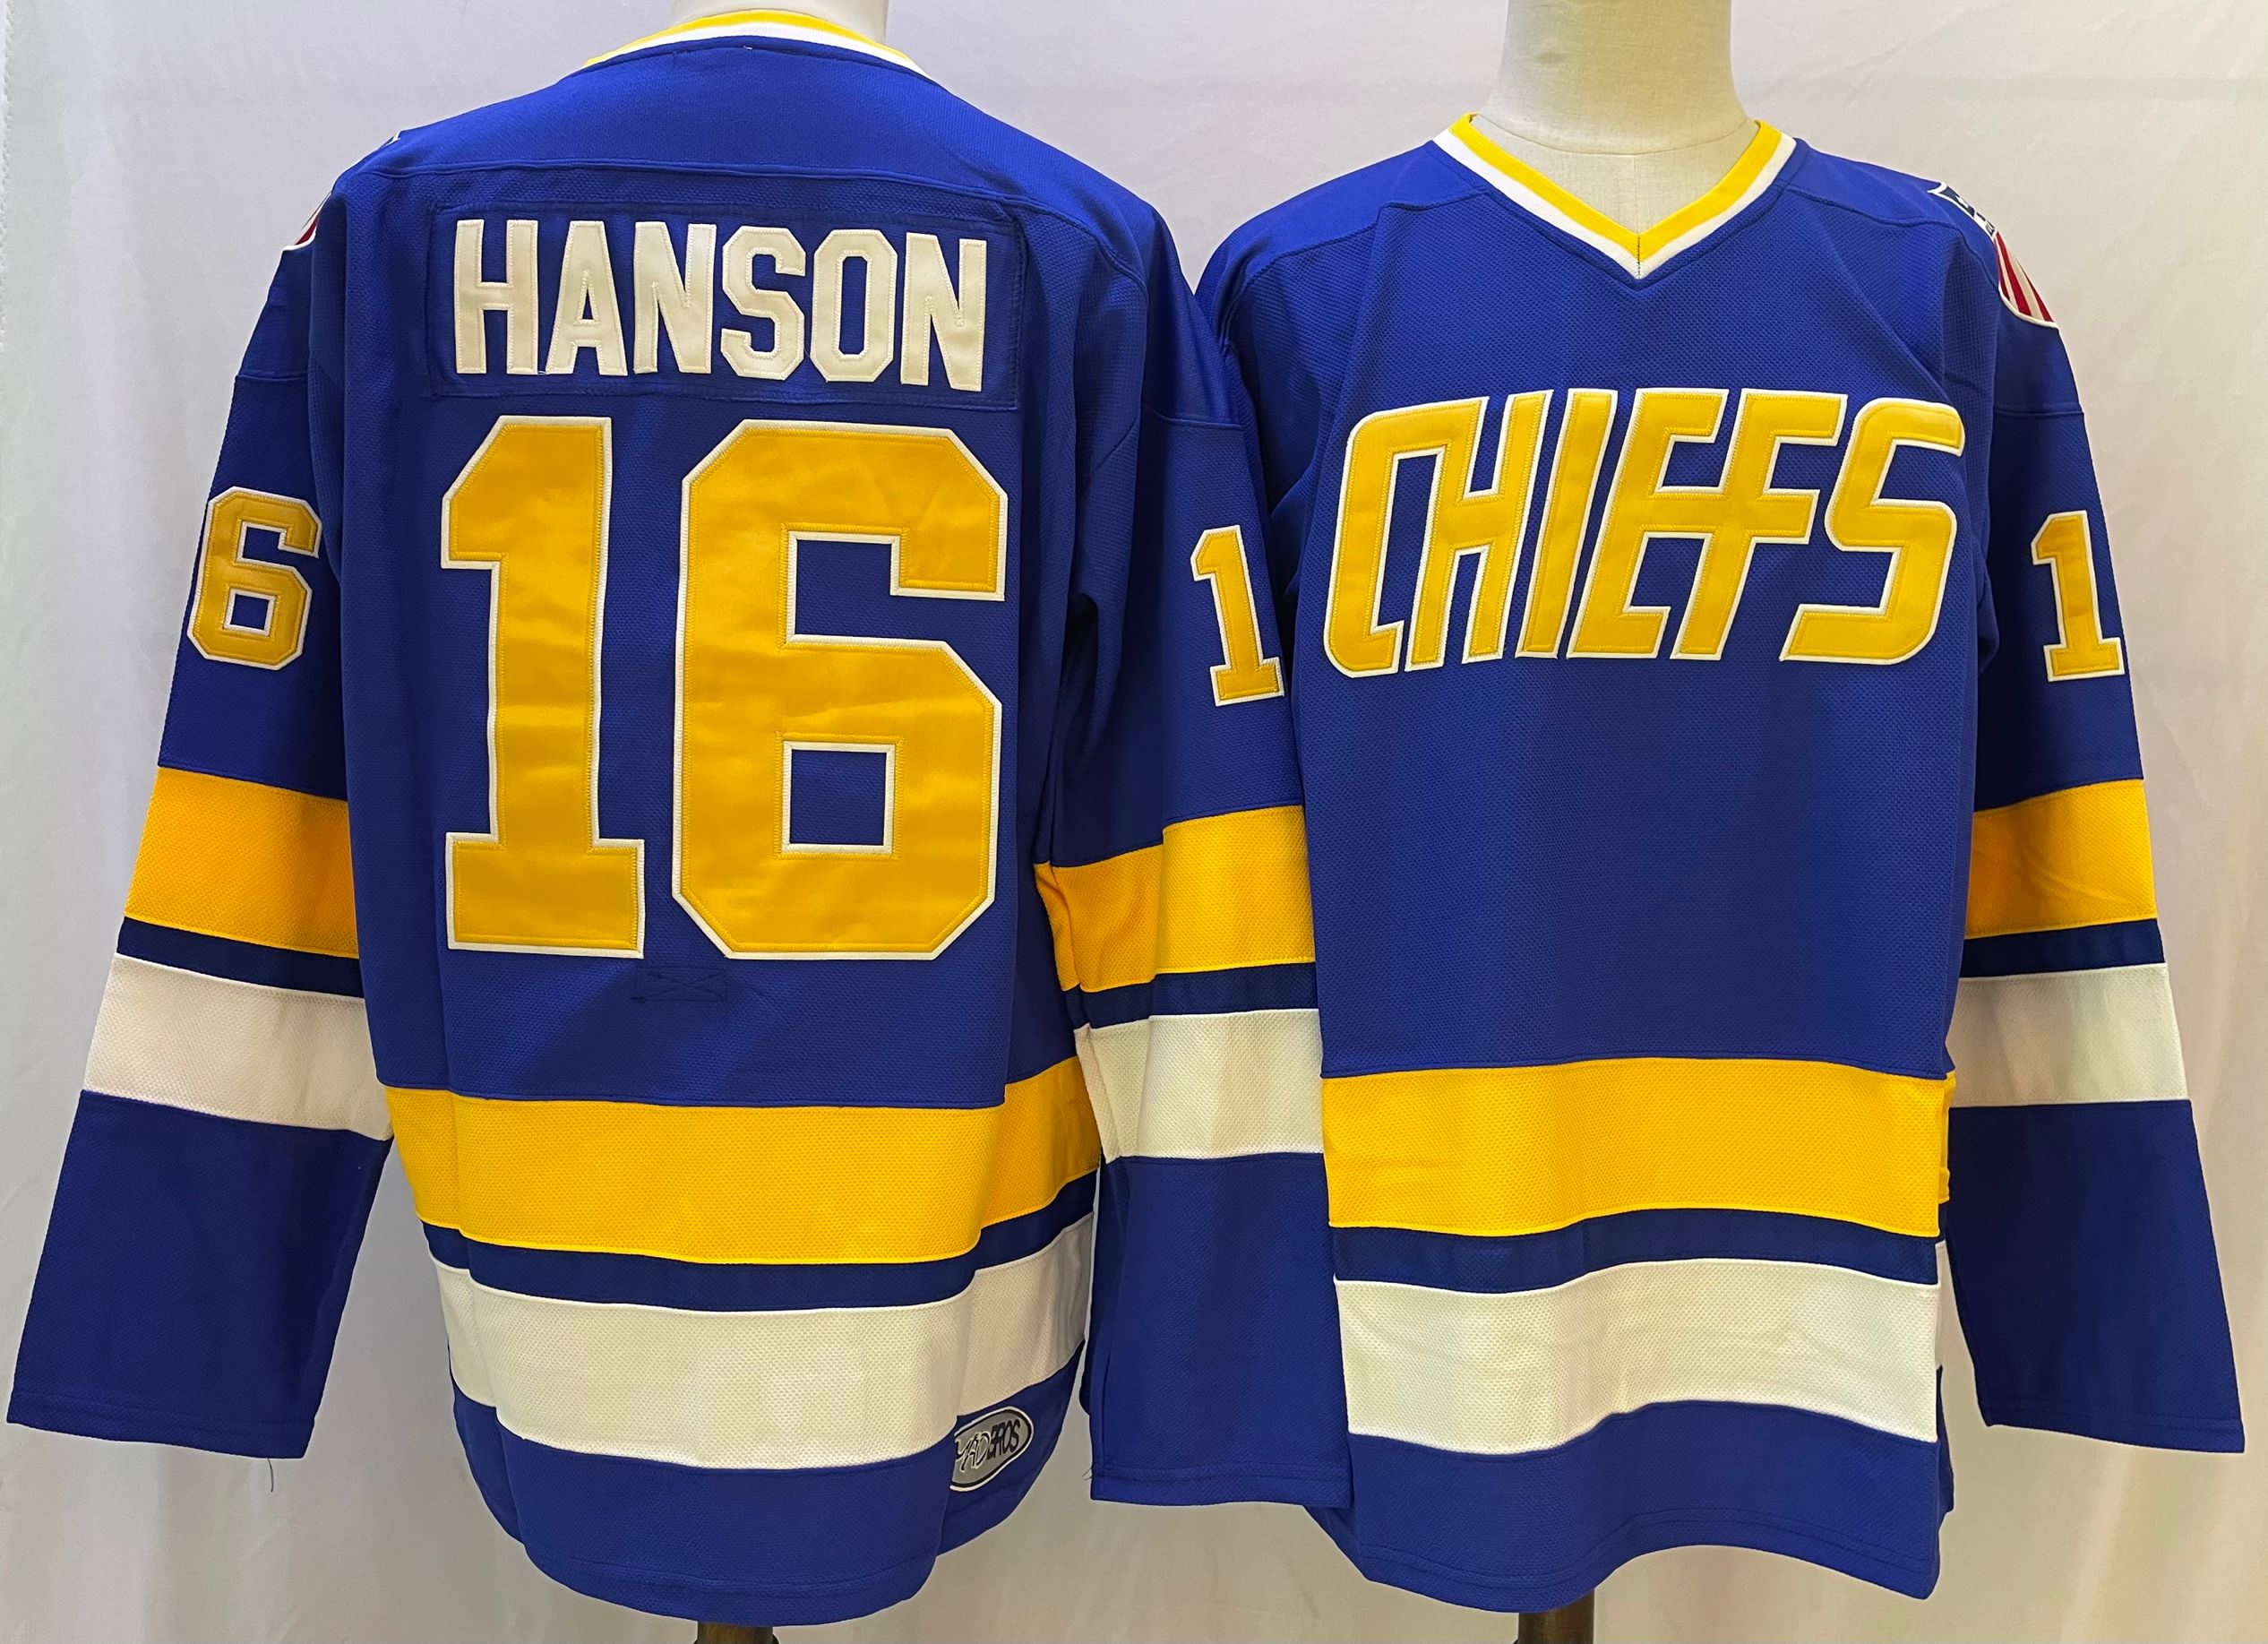 The NHL Movie Edtion #16 HANSON Blue Jersey